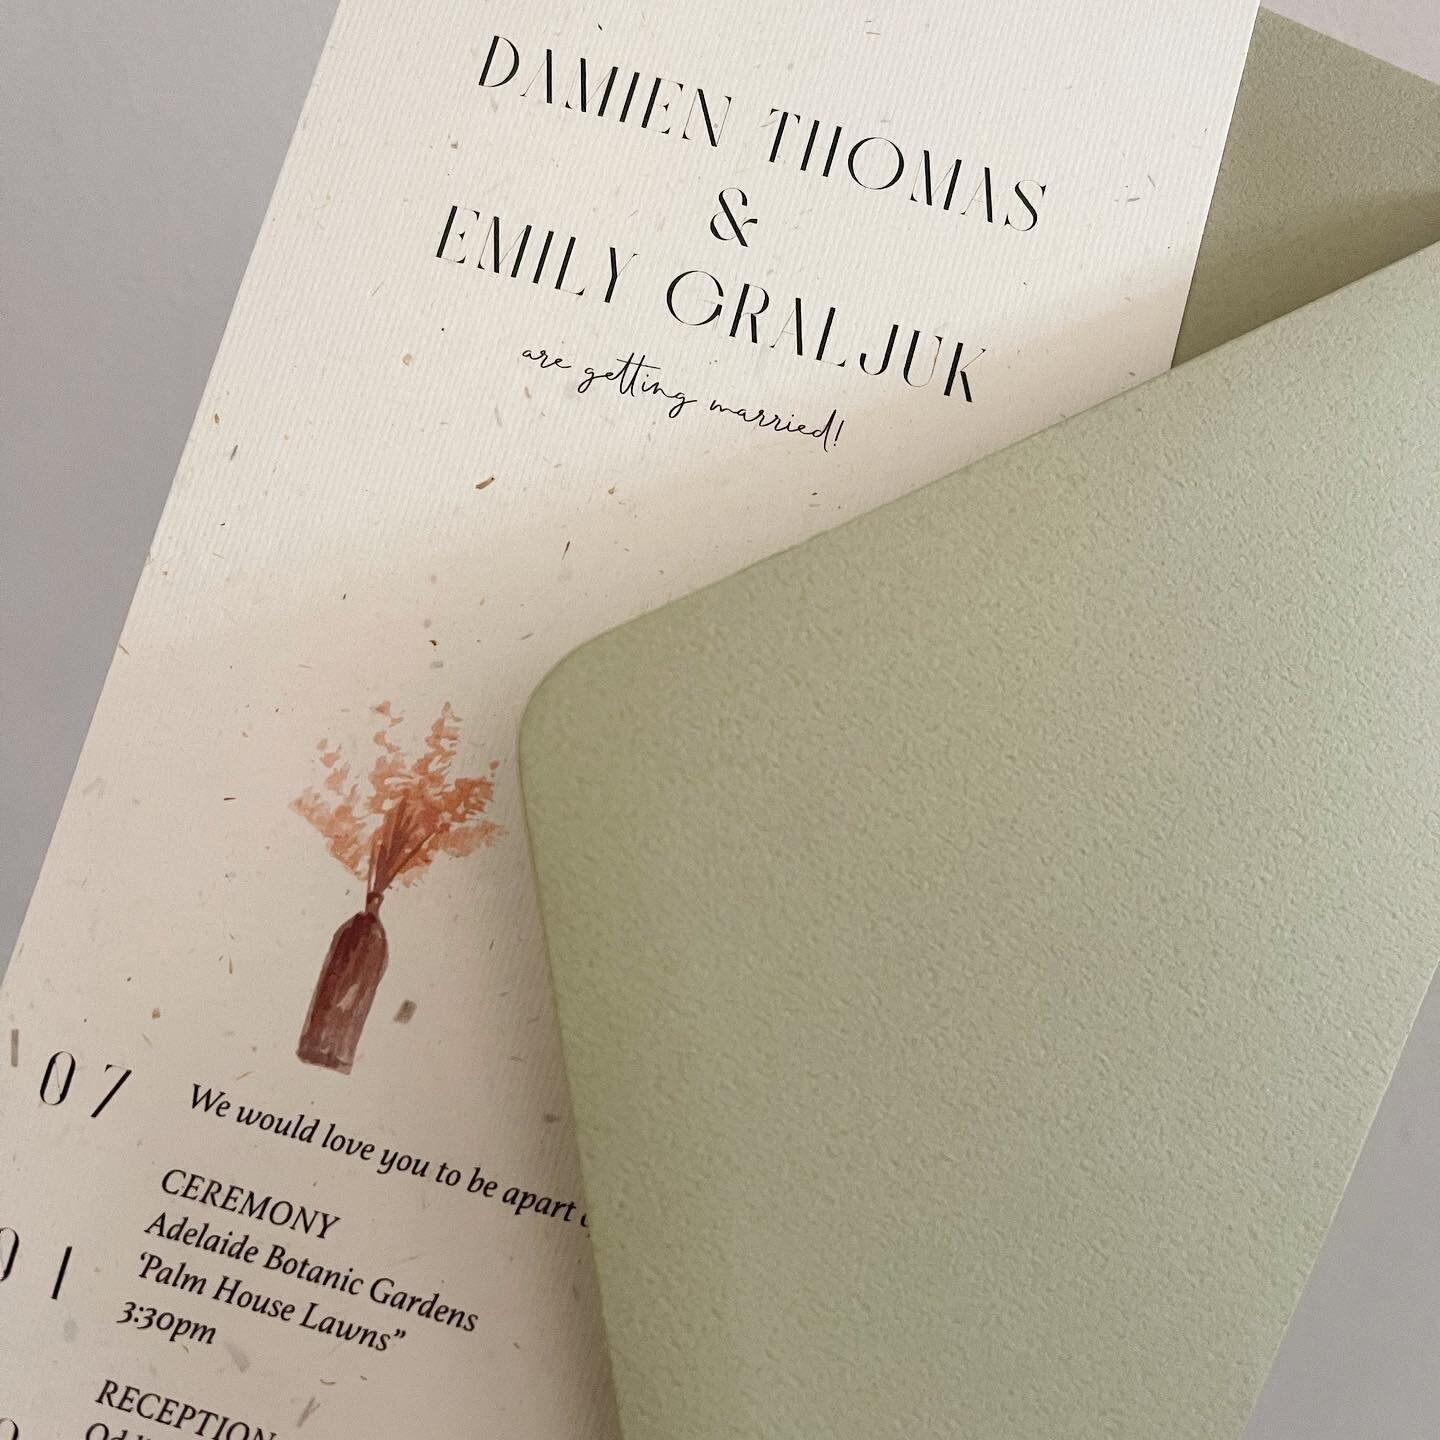 Wedding invite delight 🌱
Textured stock with sage envelope.

#weddinginvite #wedding #invite #design #graphicdesign